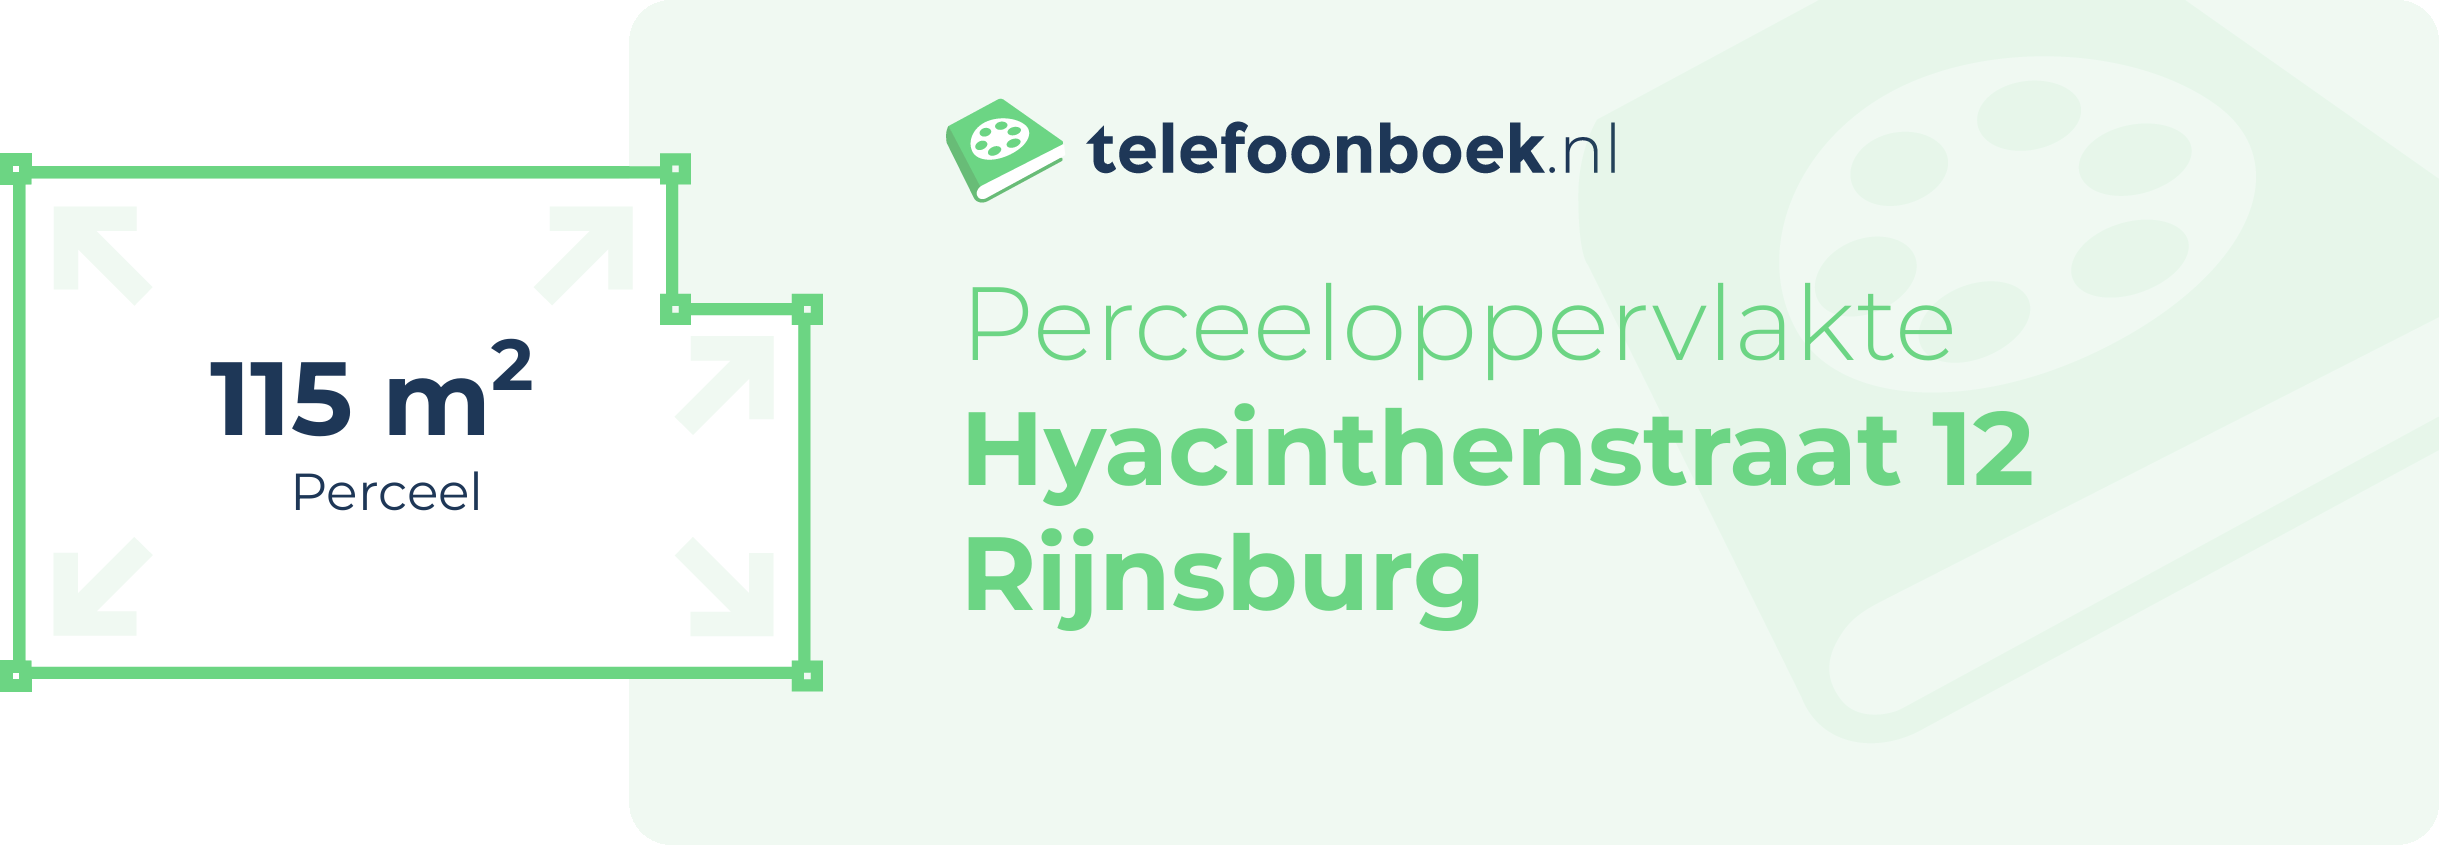 Perceeloppervlakte Hyacinthenstraat 12 Rijnsburg